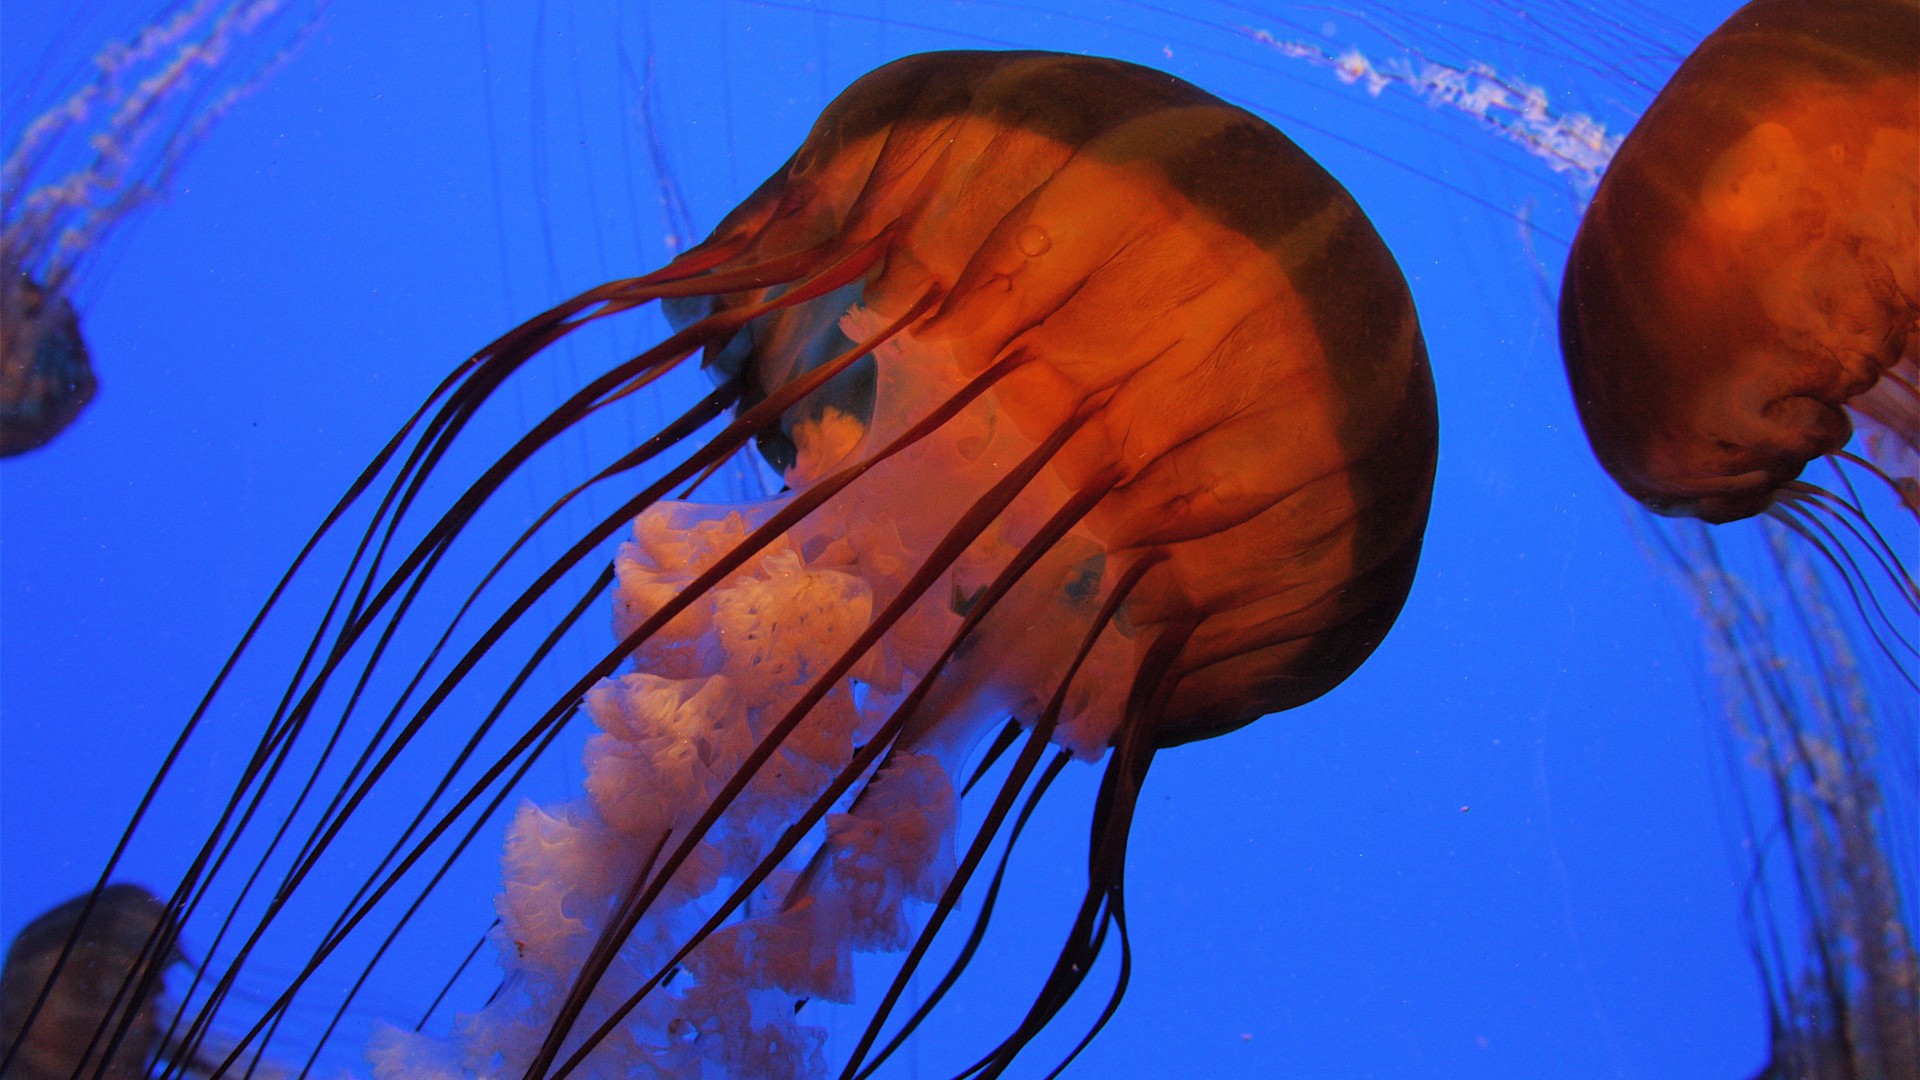 Jellyfish, 4k, 5k wallpaper, Pacific sea nettle, Georgia, Atlanta, diving, tourism, Aquarium, water, blue, orange (horizontal)